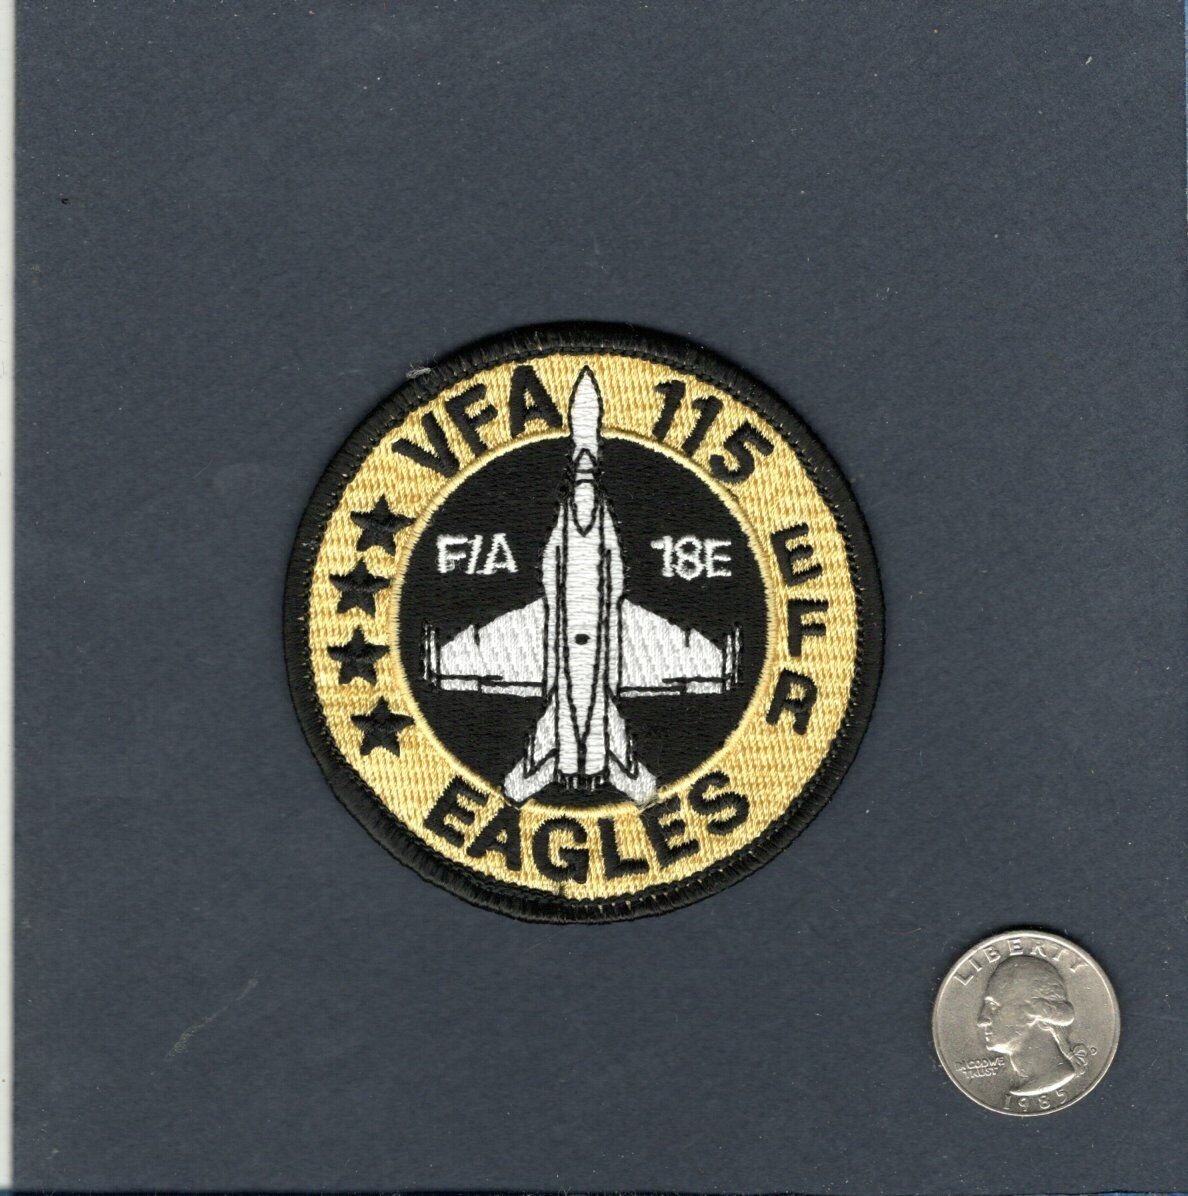 Original VFA-115 EAGLES US NAVY F-18 F-18E  SUPER HORNET Squadron Bullet Patch